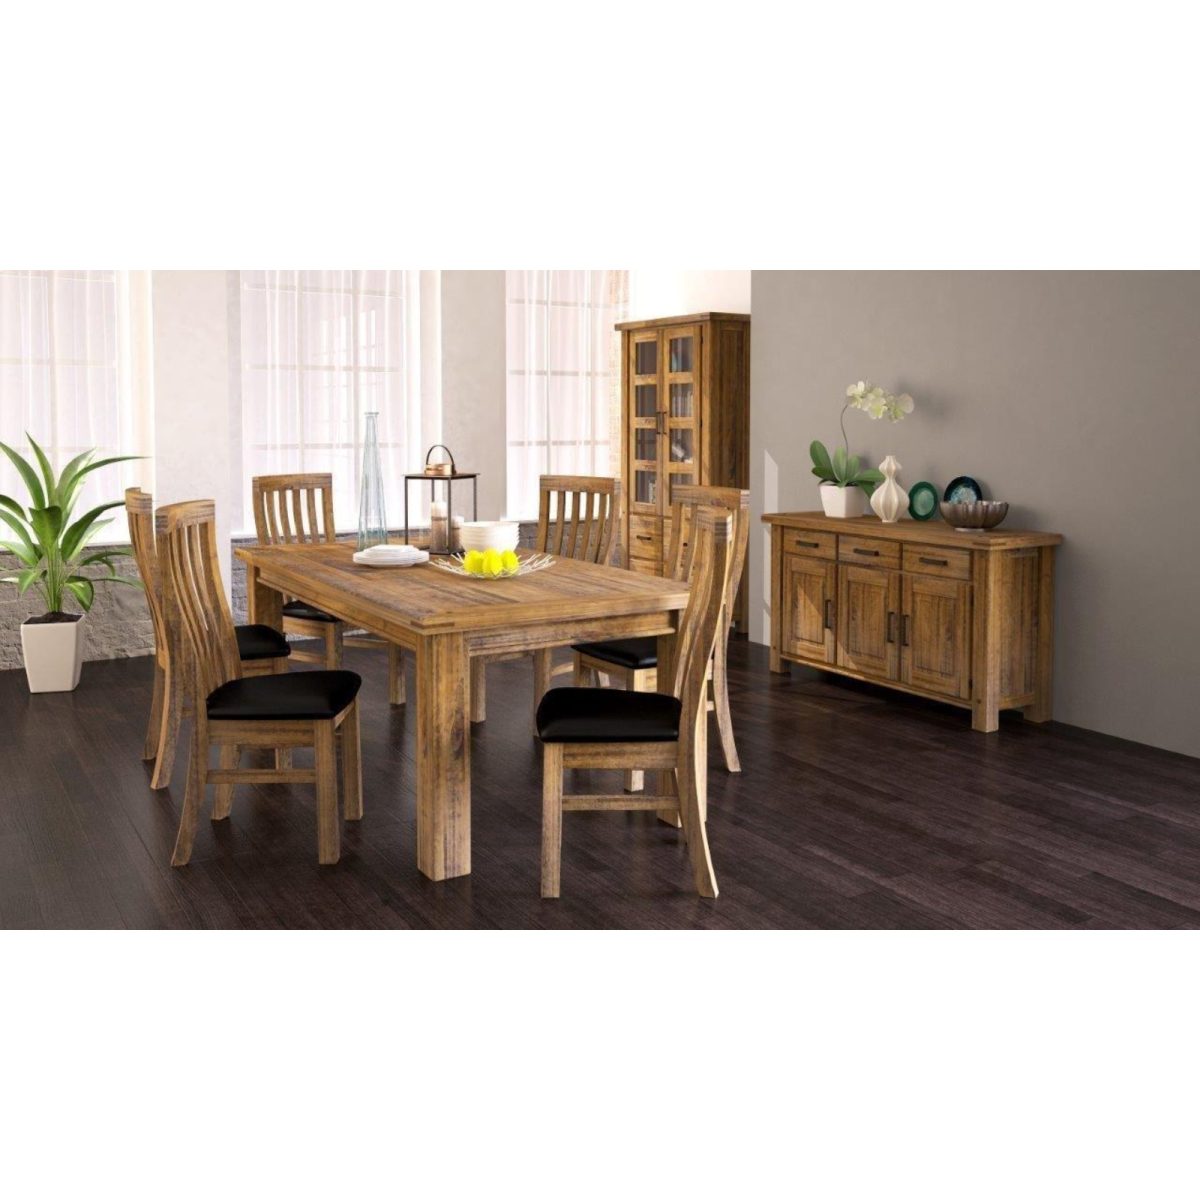 Teasel Buffet Table 191cm 4 Door 4 Drawer Solid Pine Timber Wood – Rustic Oak